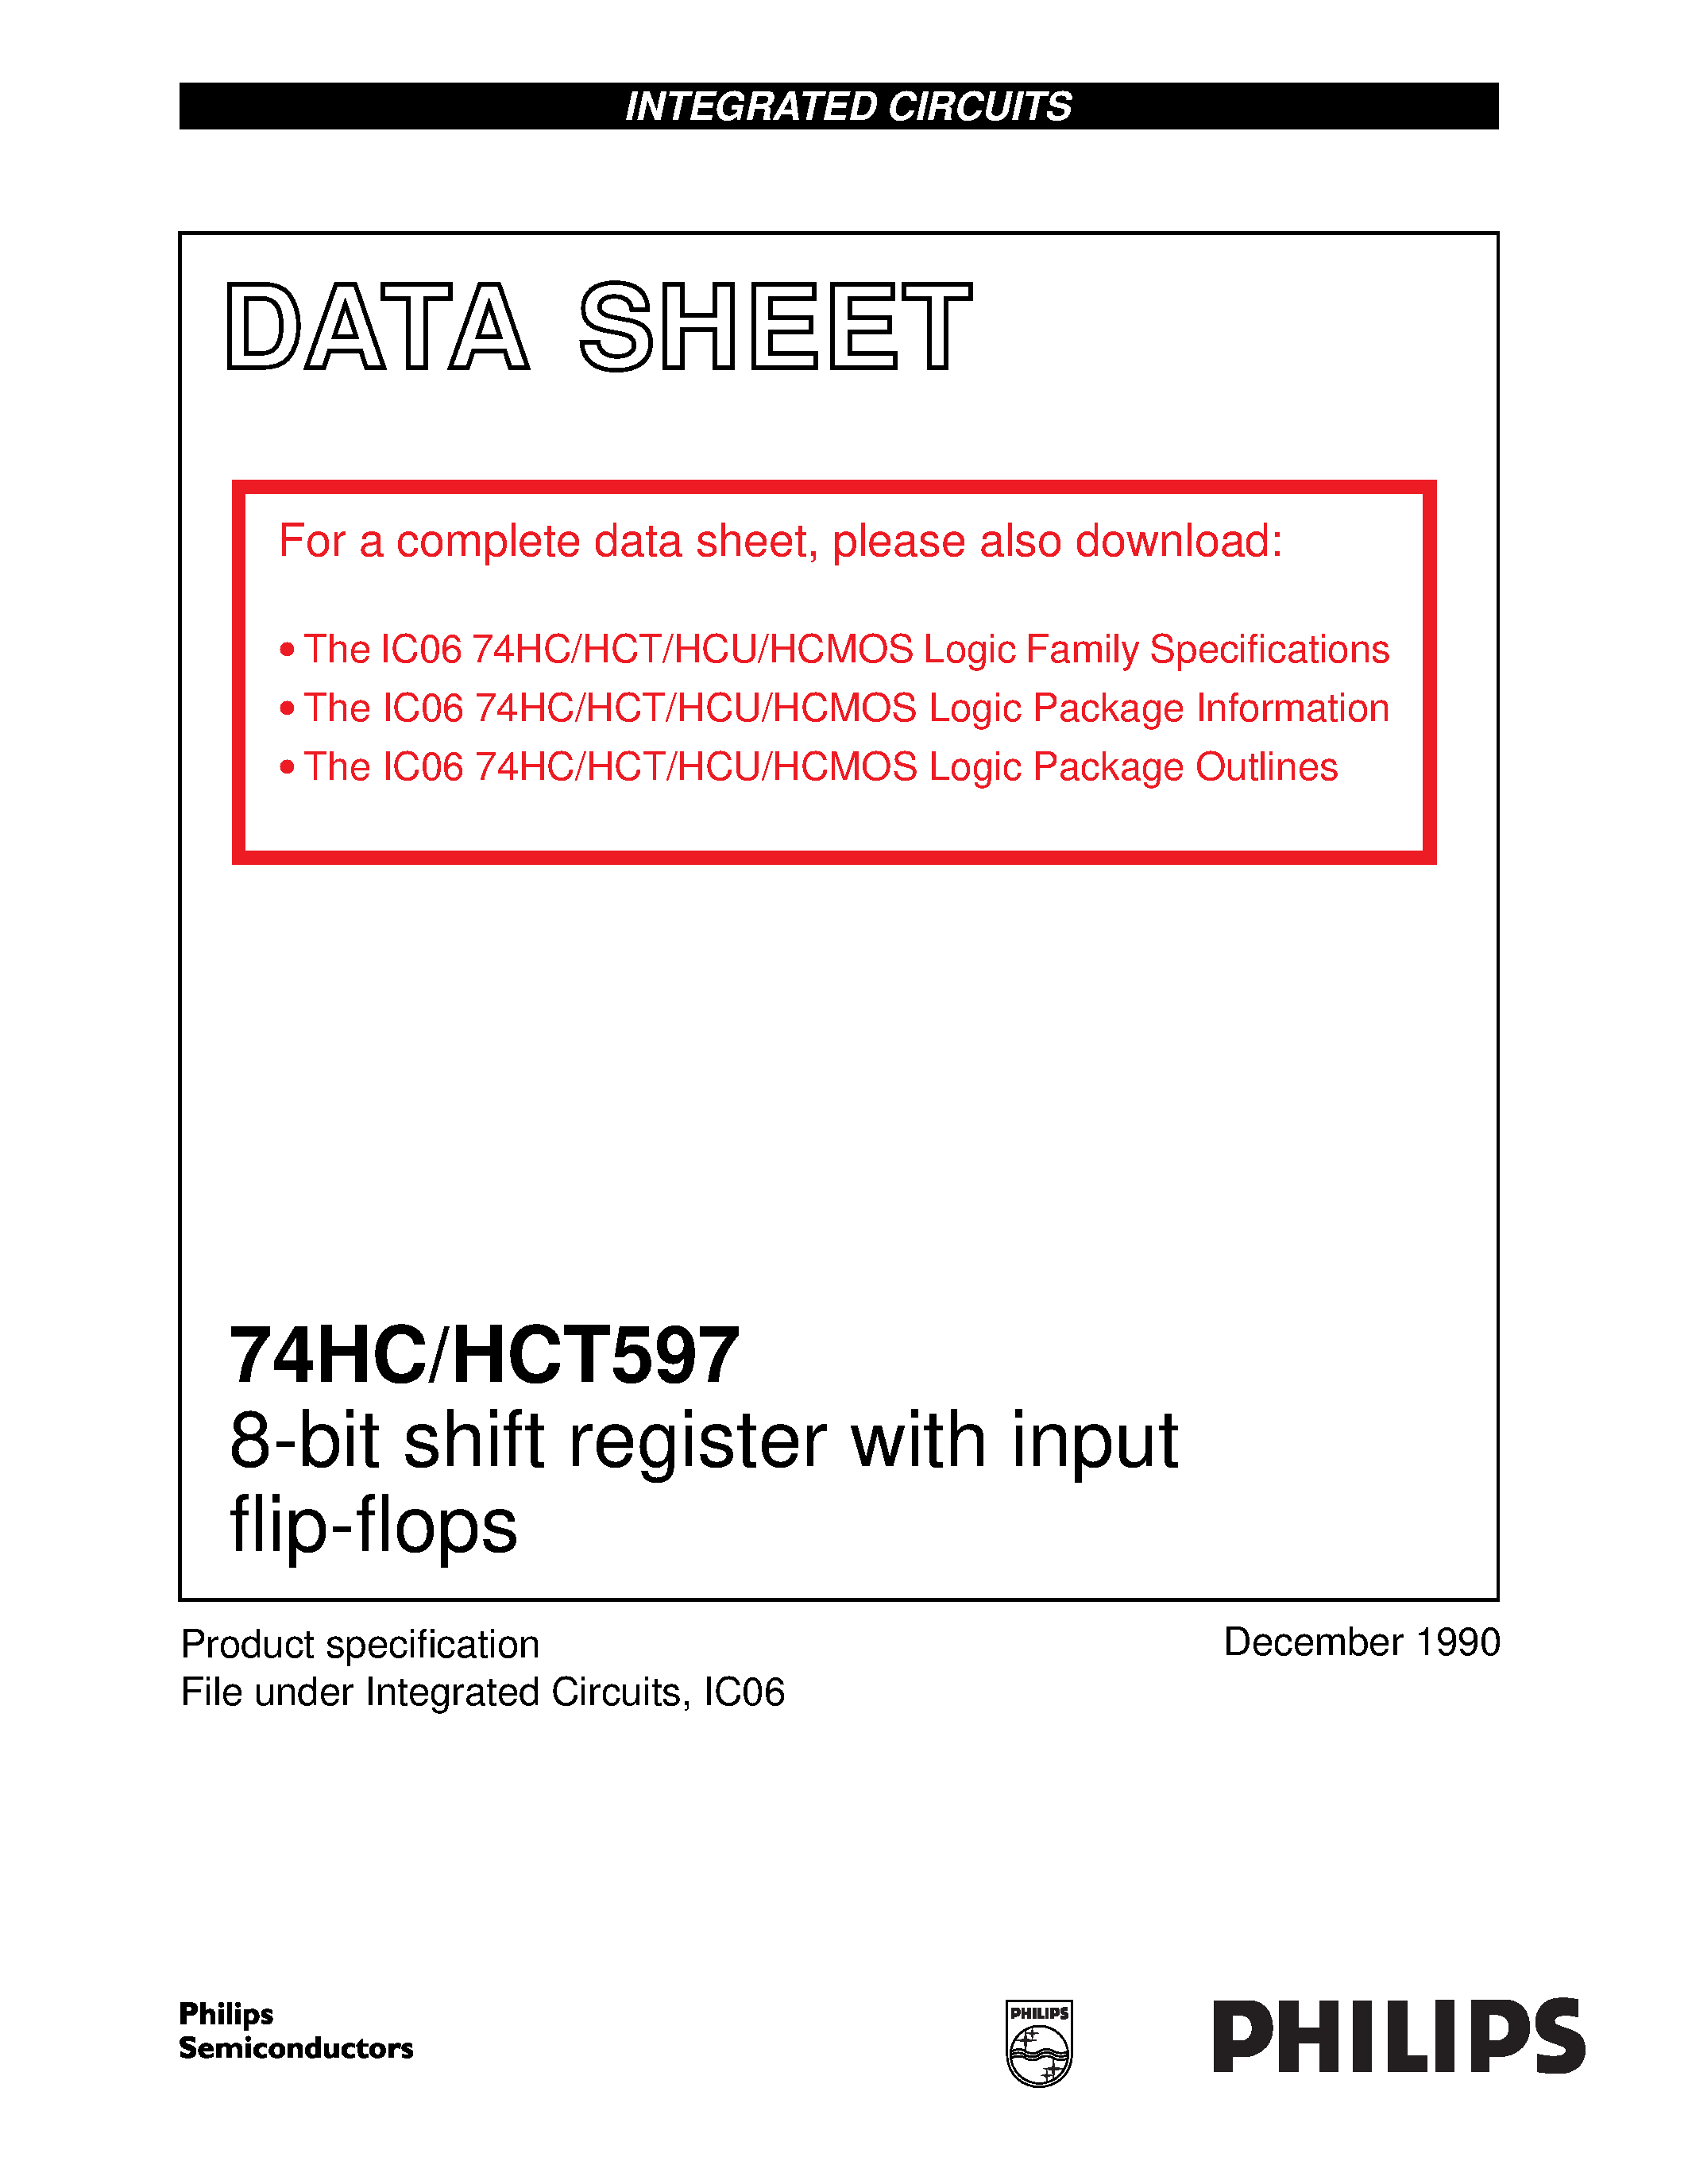 Даташит 74HCT597 - 8-bit shift register with input flip-flops страница 1